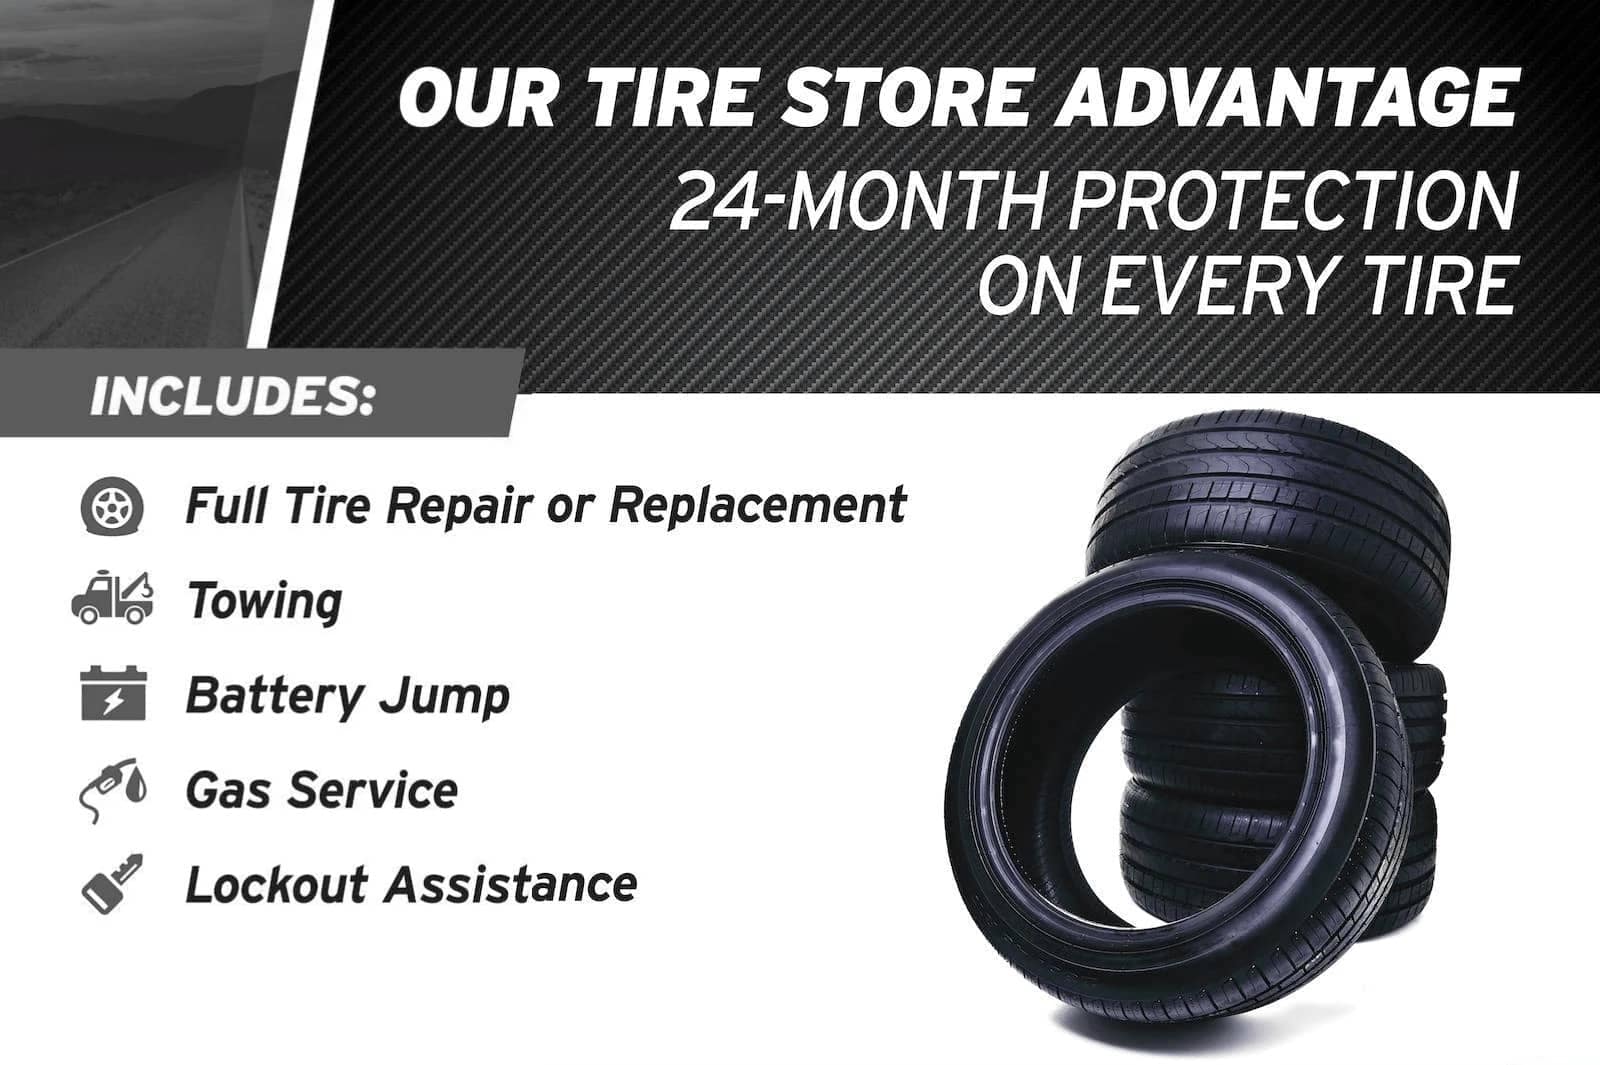 Our tire store advantage